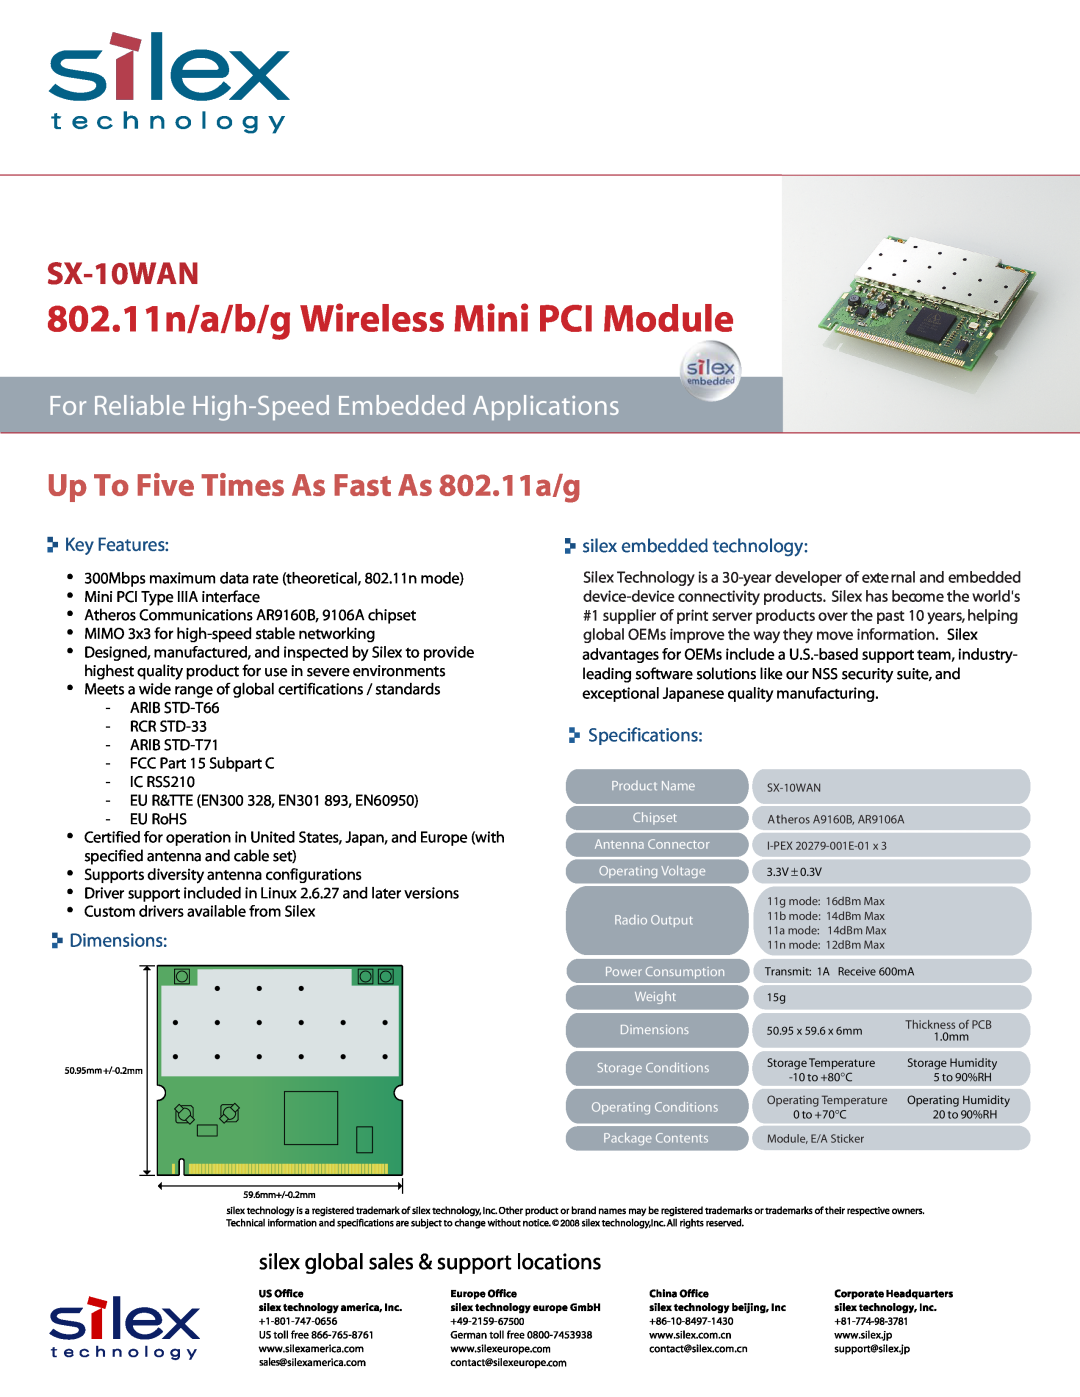 Silex technology SX-10WAN manual 802.11n/a/b/g Wireless Mini PCI Module, Up To Five Times As Fast As 802.11a/g, Dimensions 